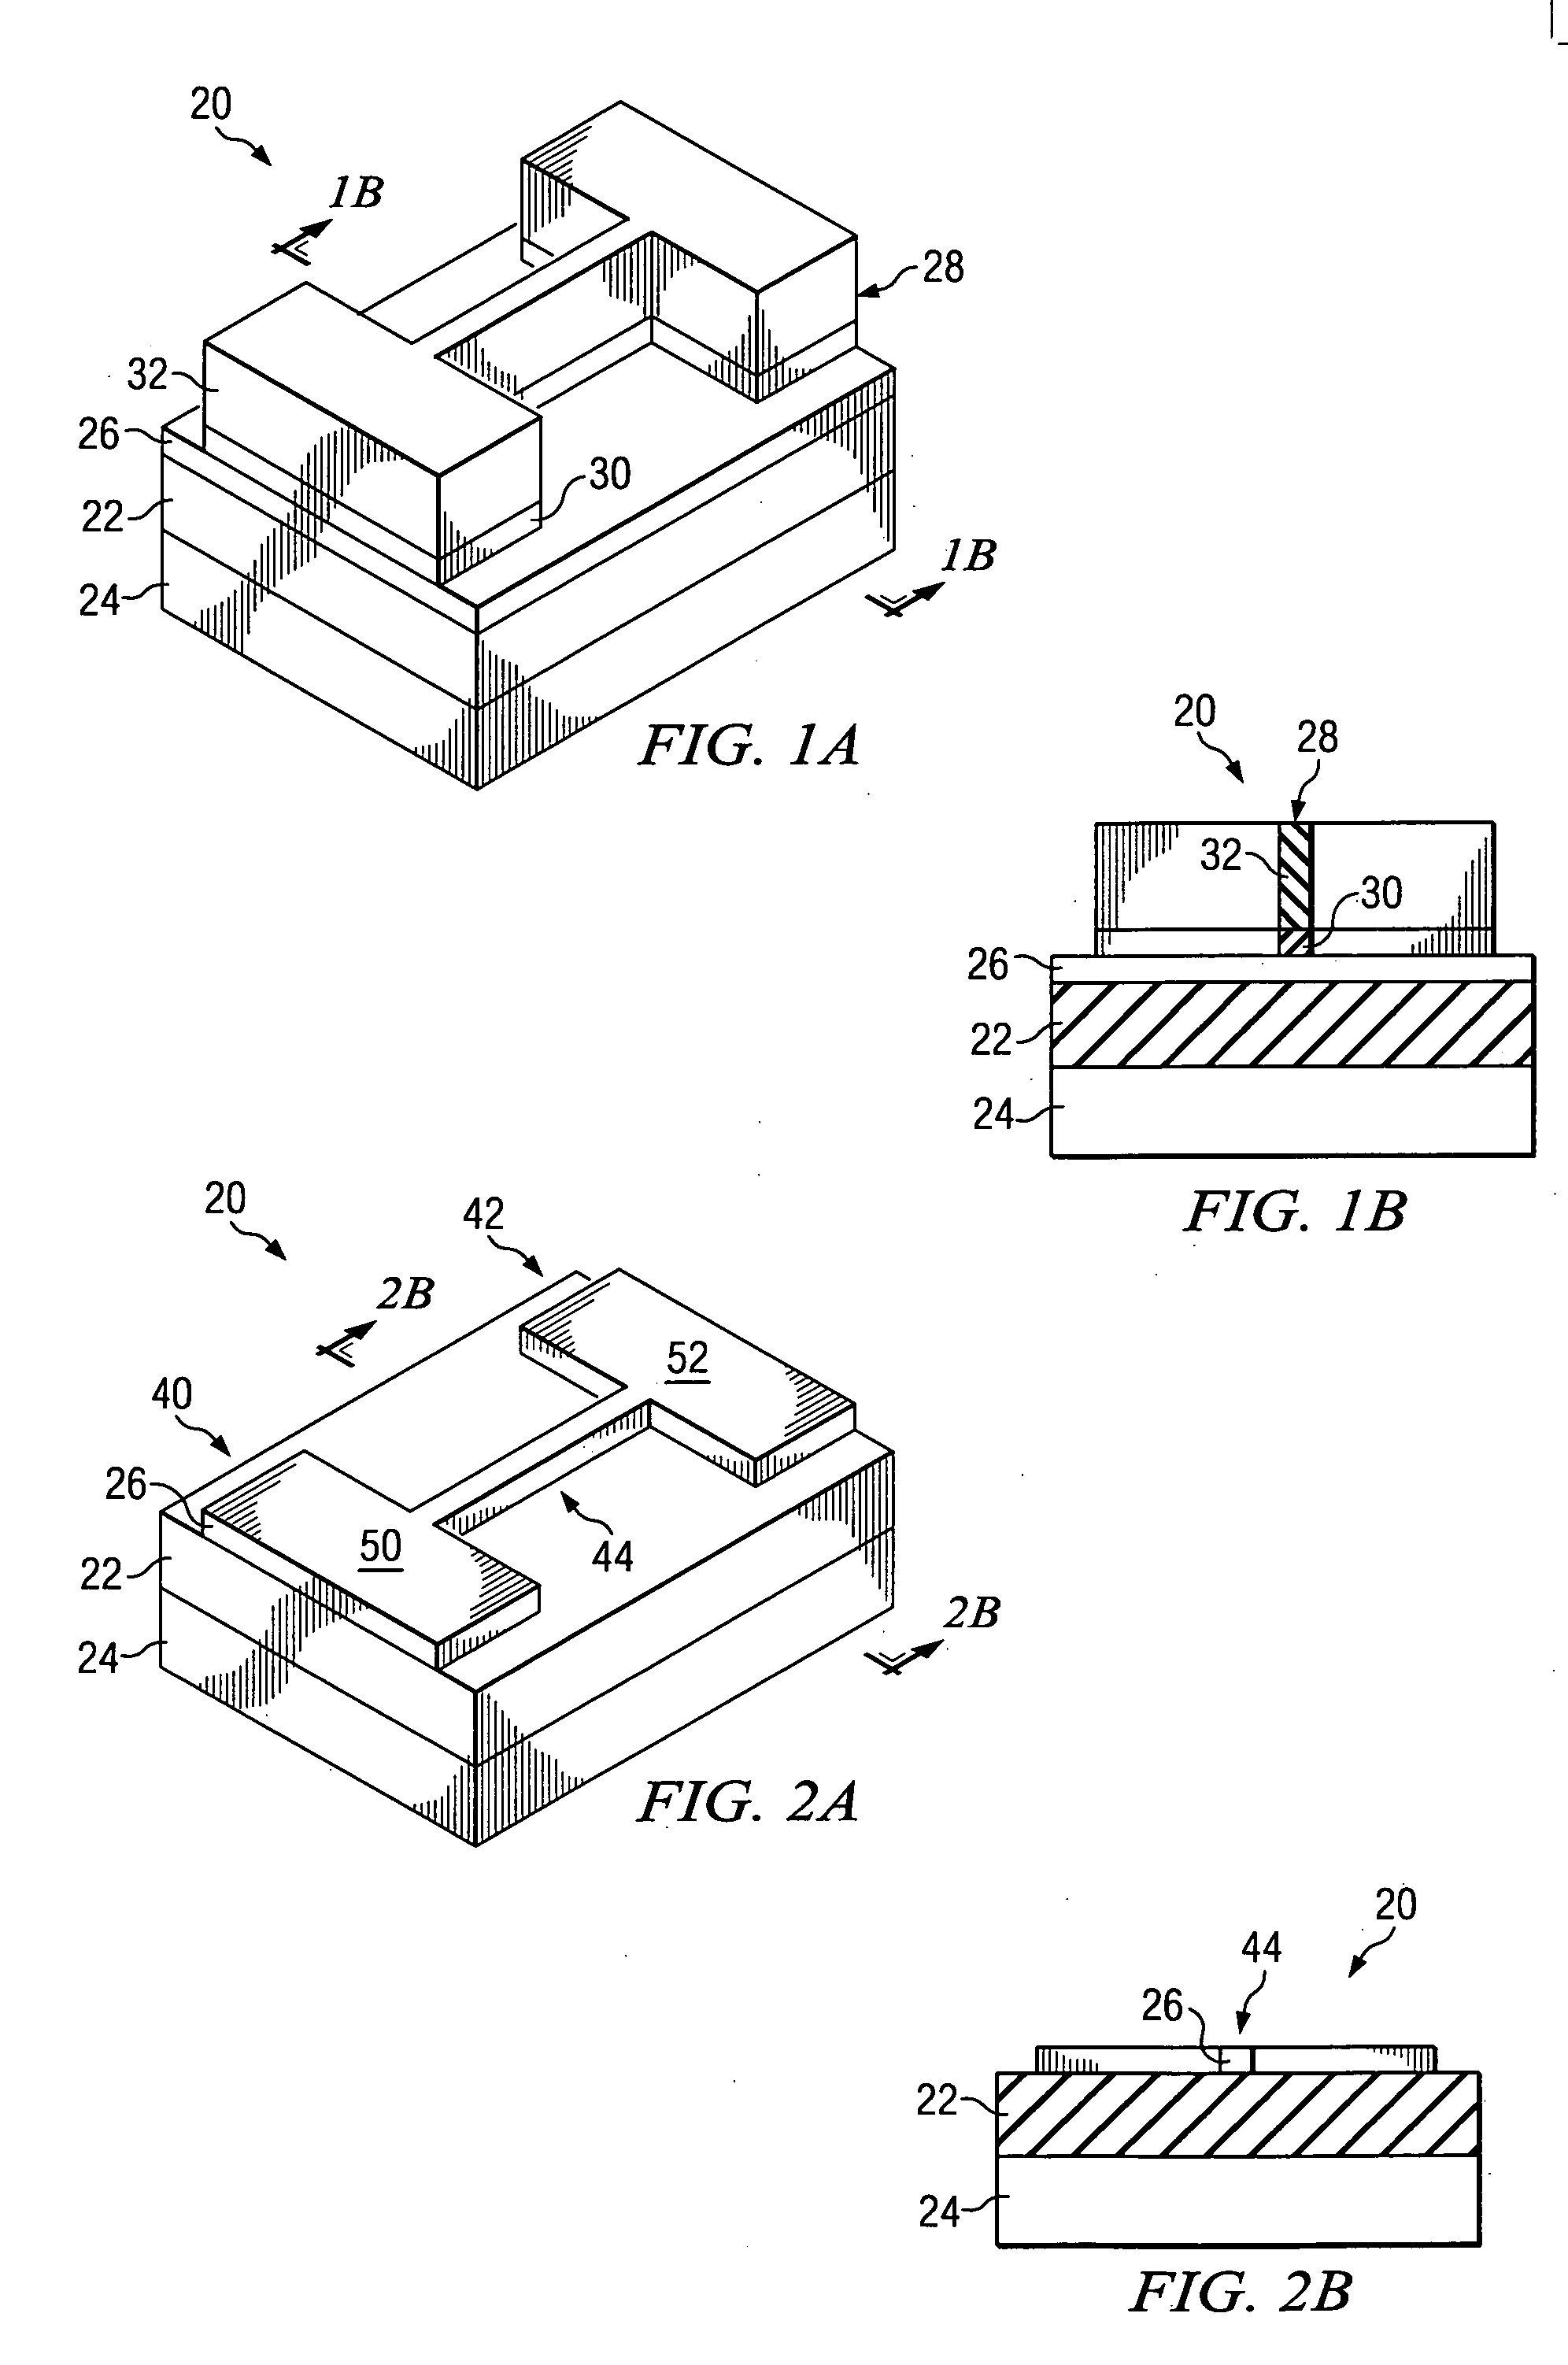 Semiconductor nano-rod devices